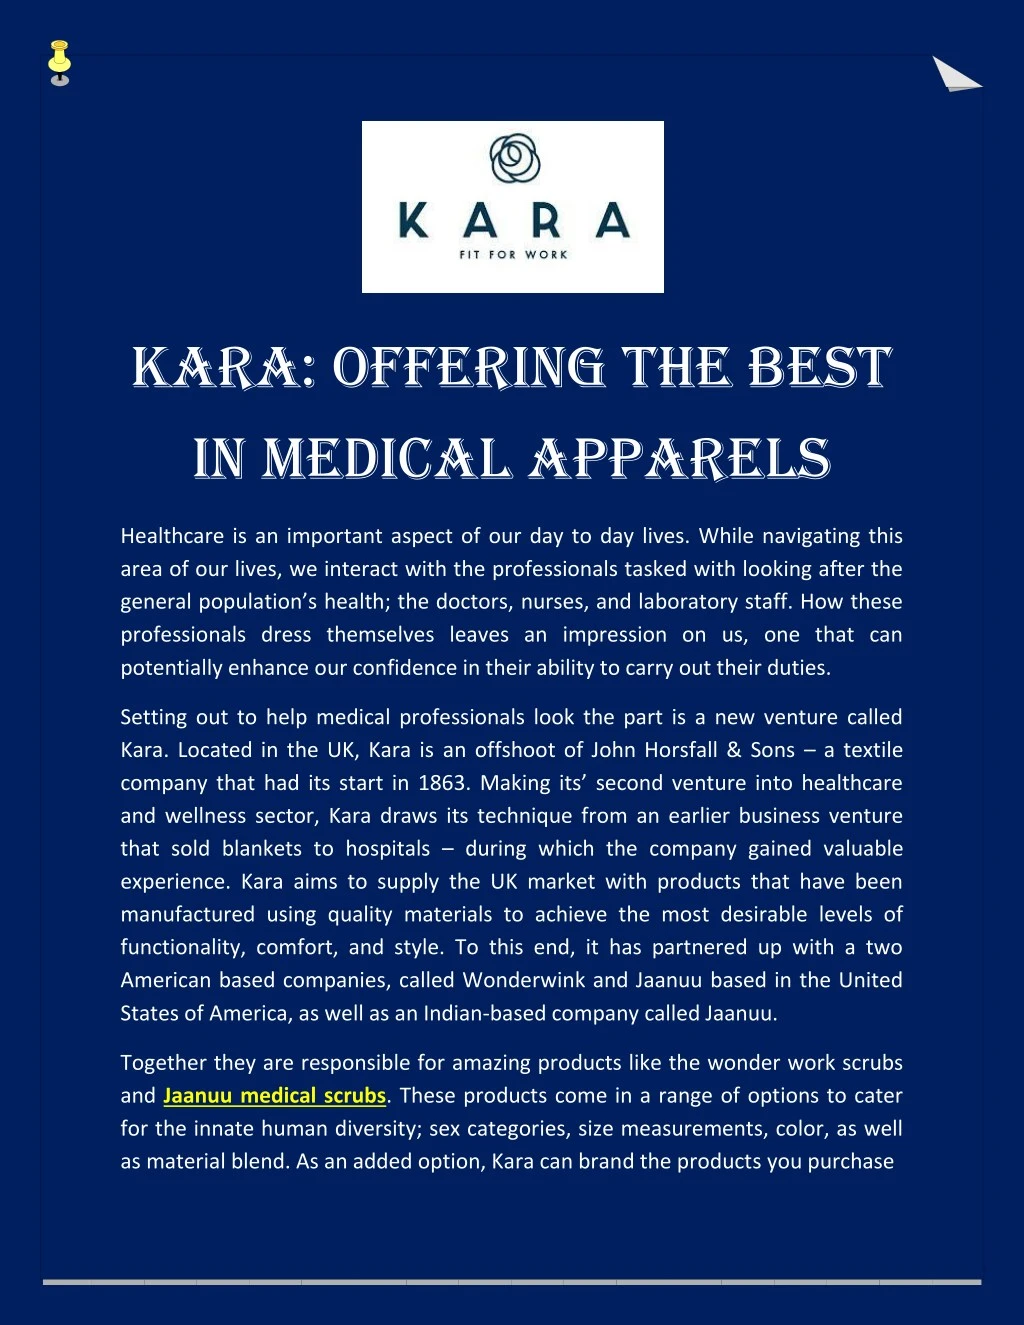 kara offering the best in medical apparels